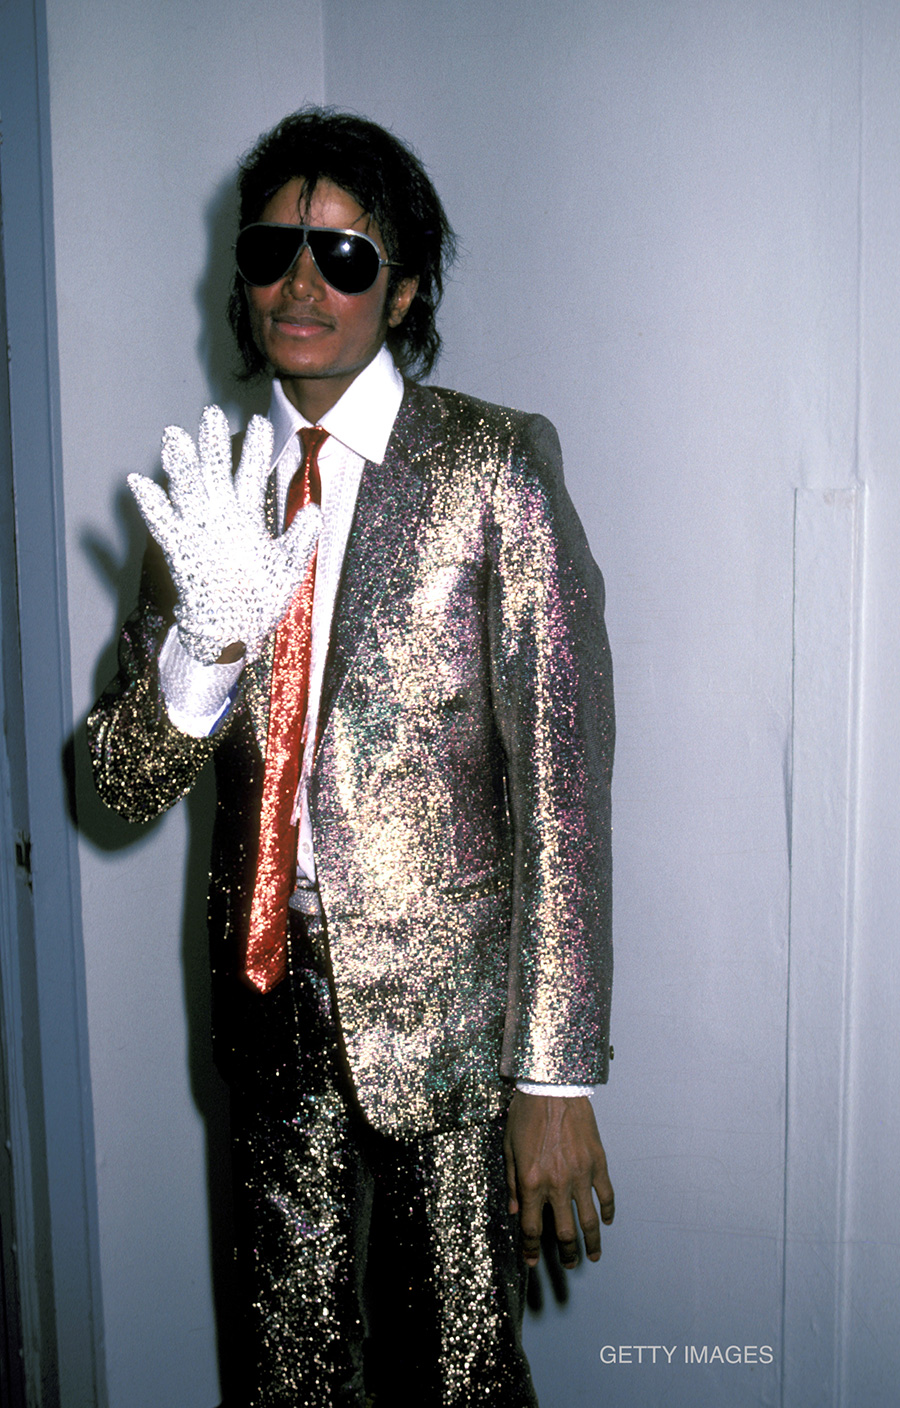 Michael Jackson attends T.J. Martell Foundation dinner April 1984